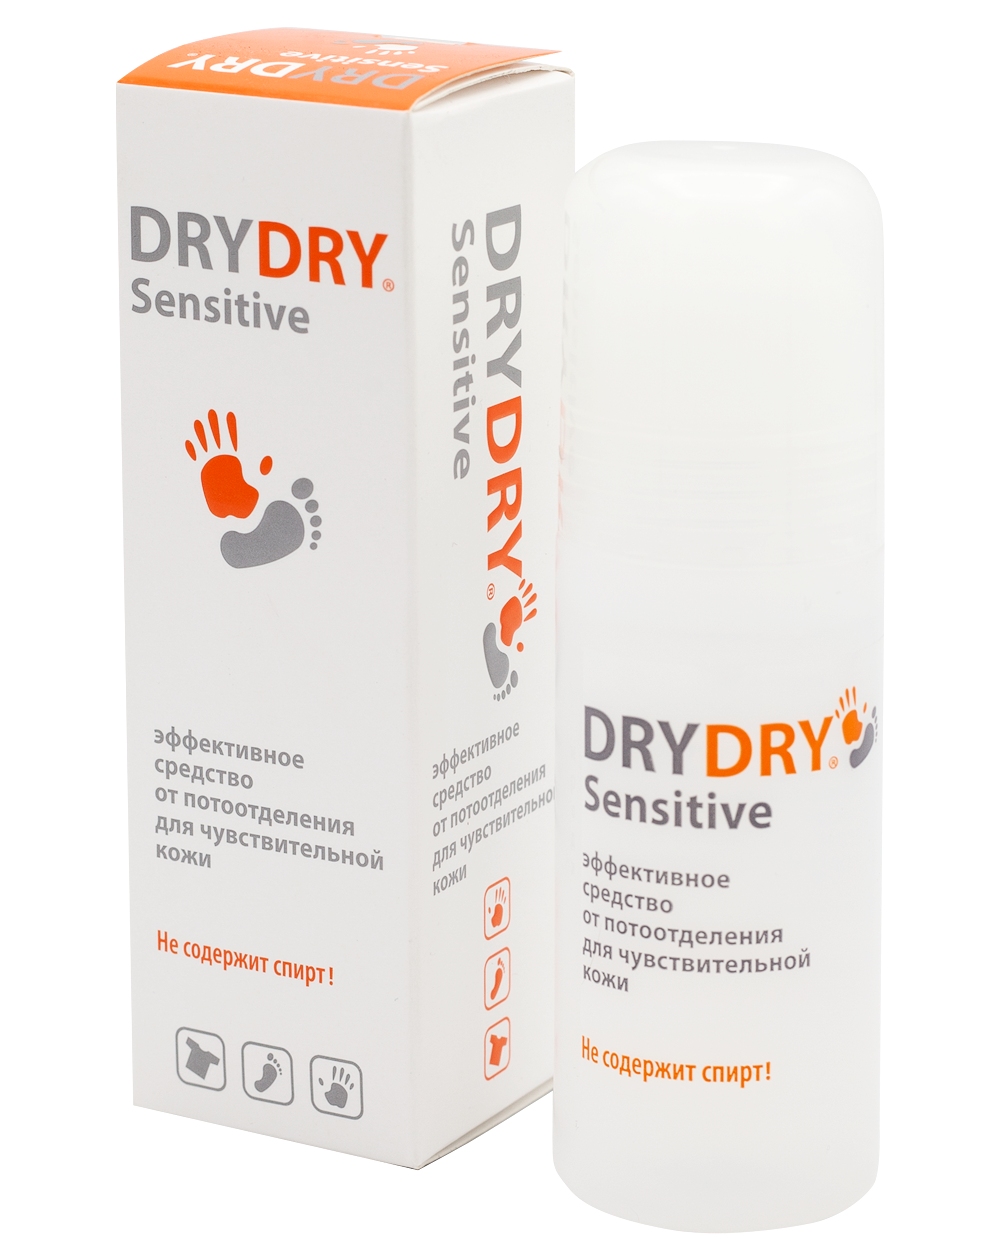 Dry dry дезодорант отзывы. Драй драй Сенситив 50 мл. Dry Dry дезодорант для подмышек. Dry Dry sensitive дезодорант. Средства драй драй для подмышек.